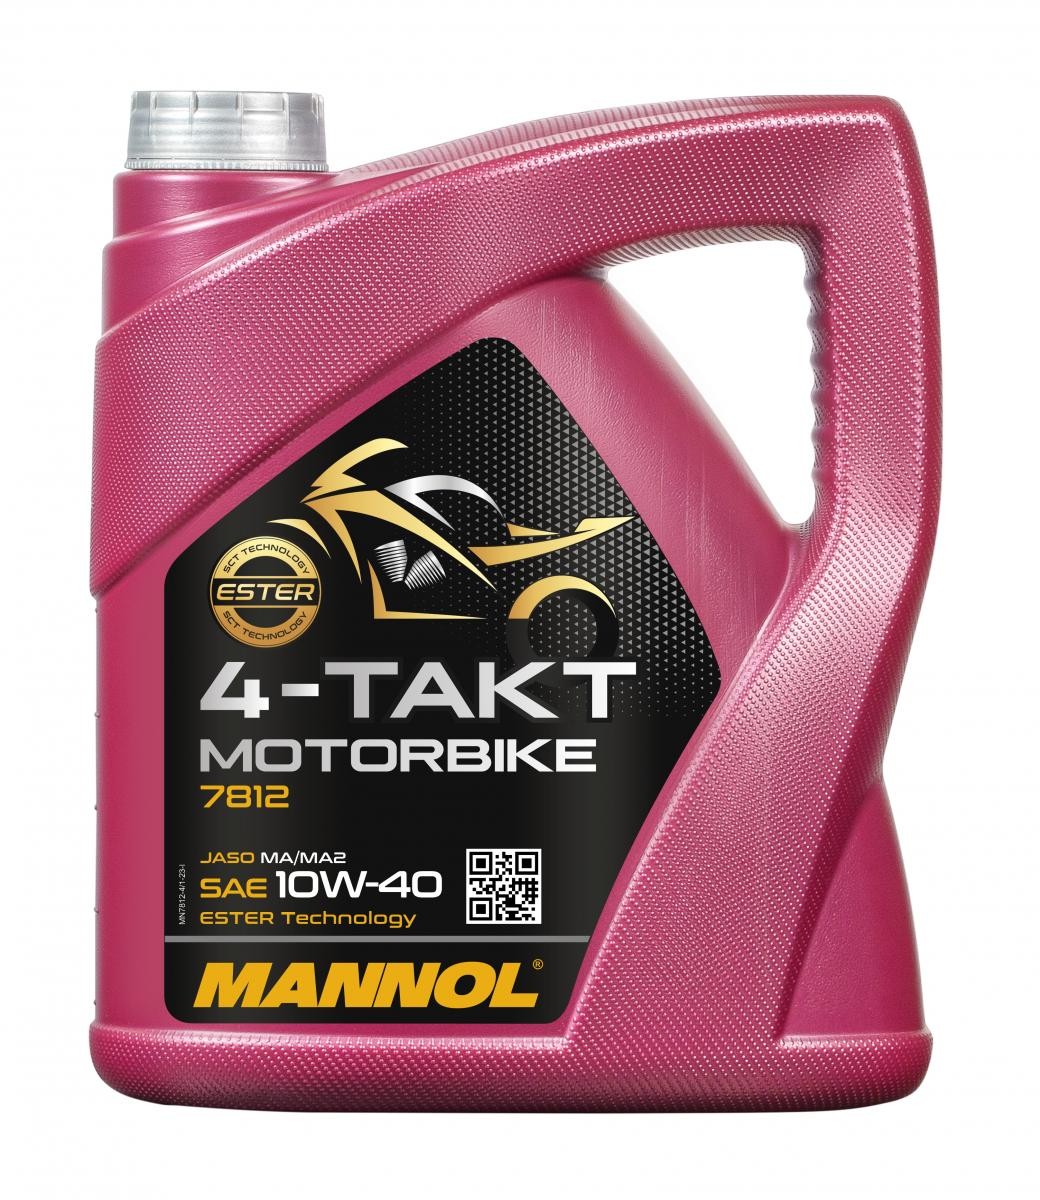 Car oil API SL MANNOL - MN7812-4 Motorbike 4-Takt